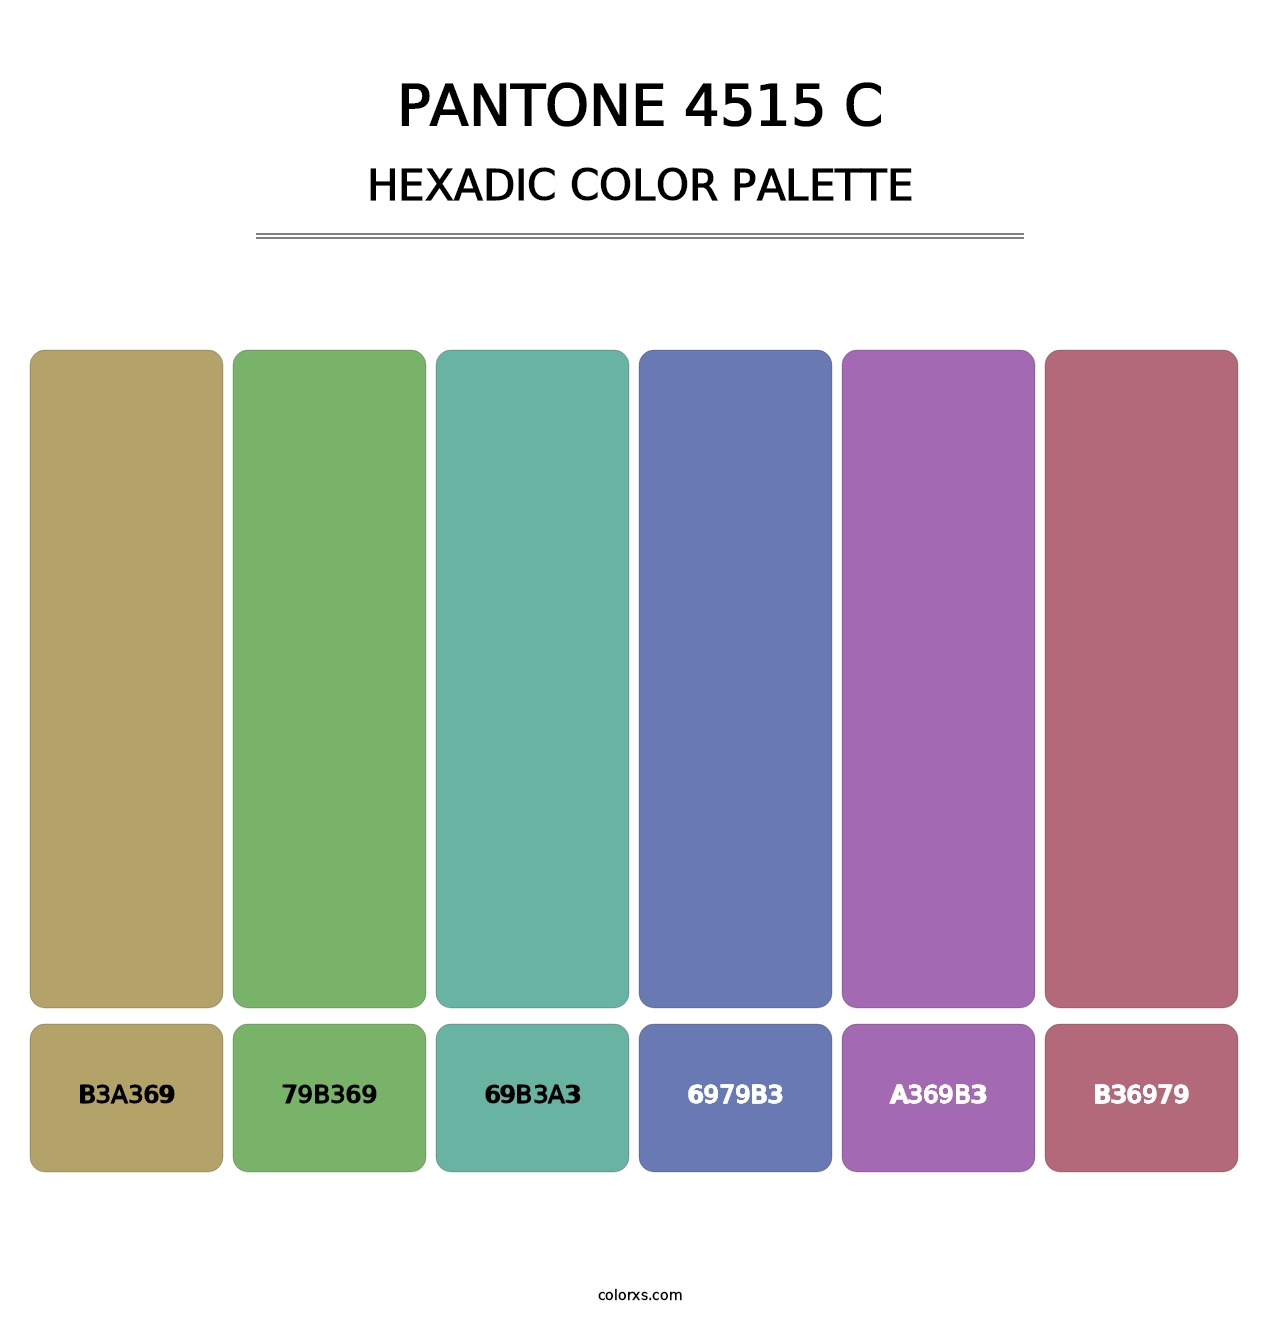 PANTONE 4515 C - Hexadic Color Palette